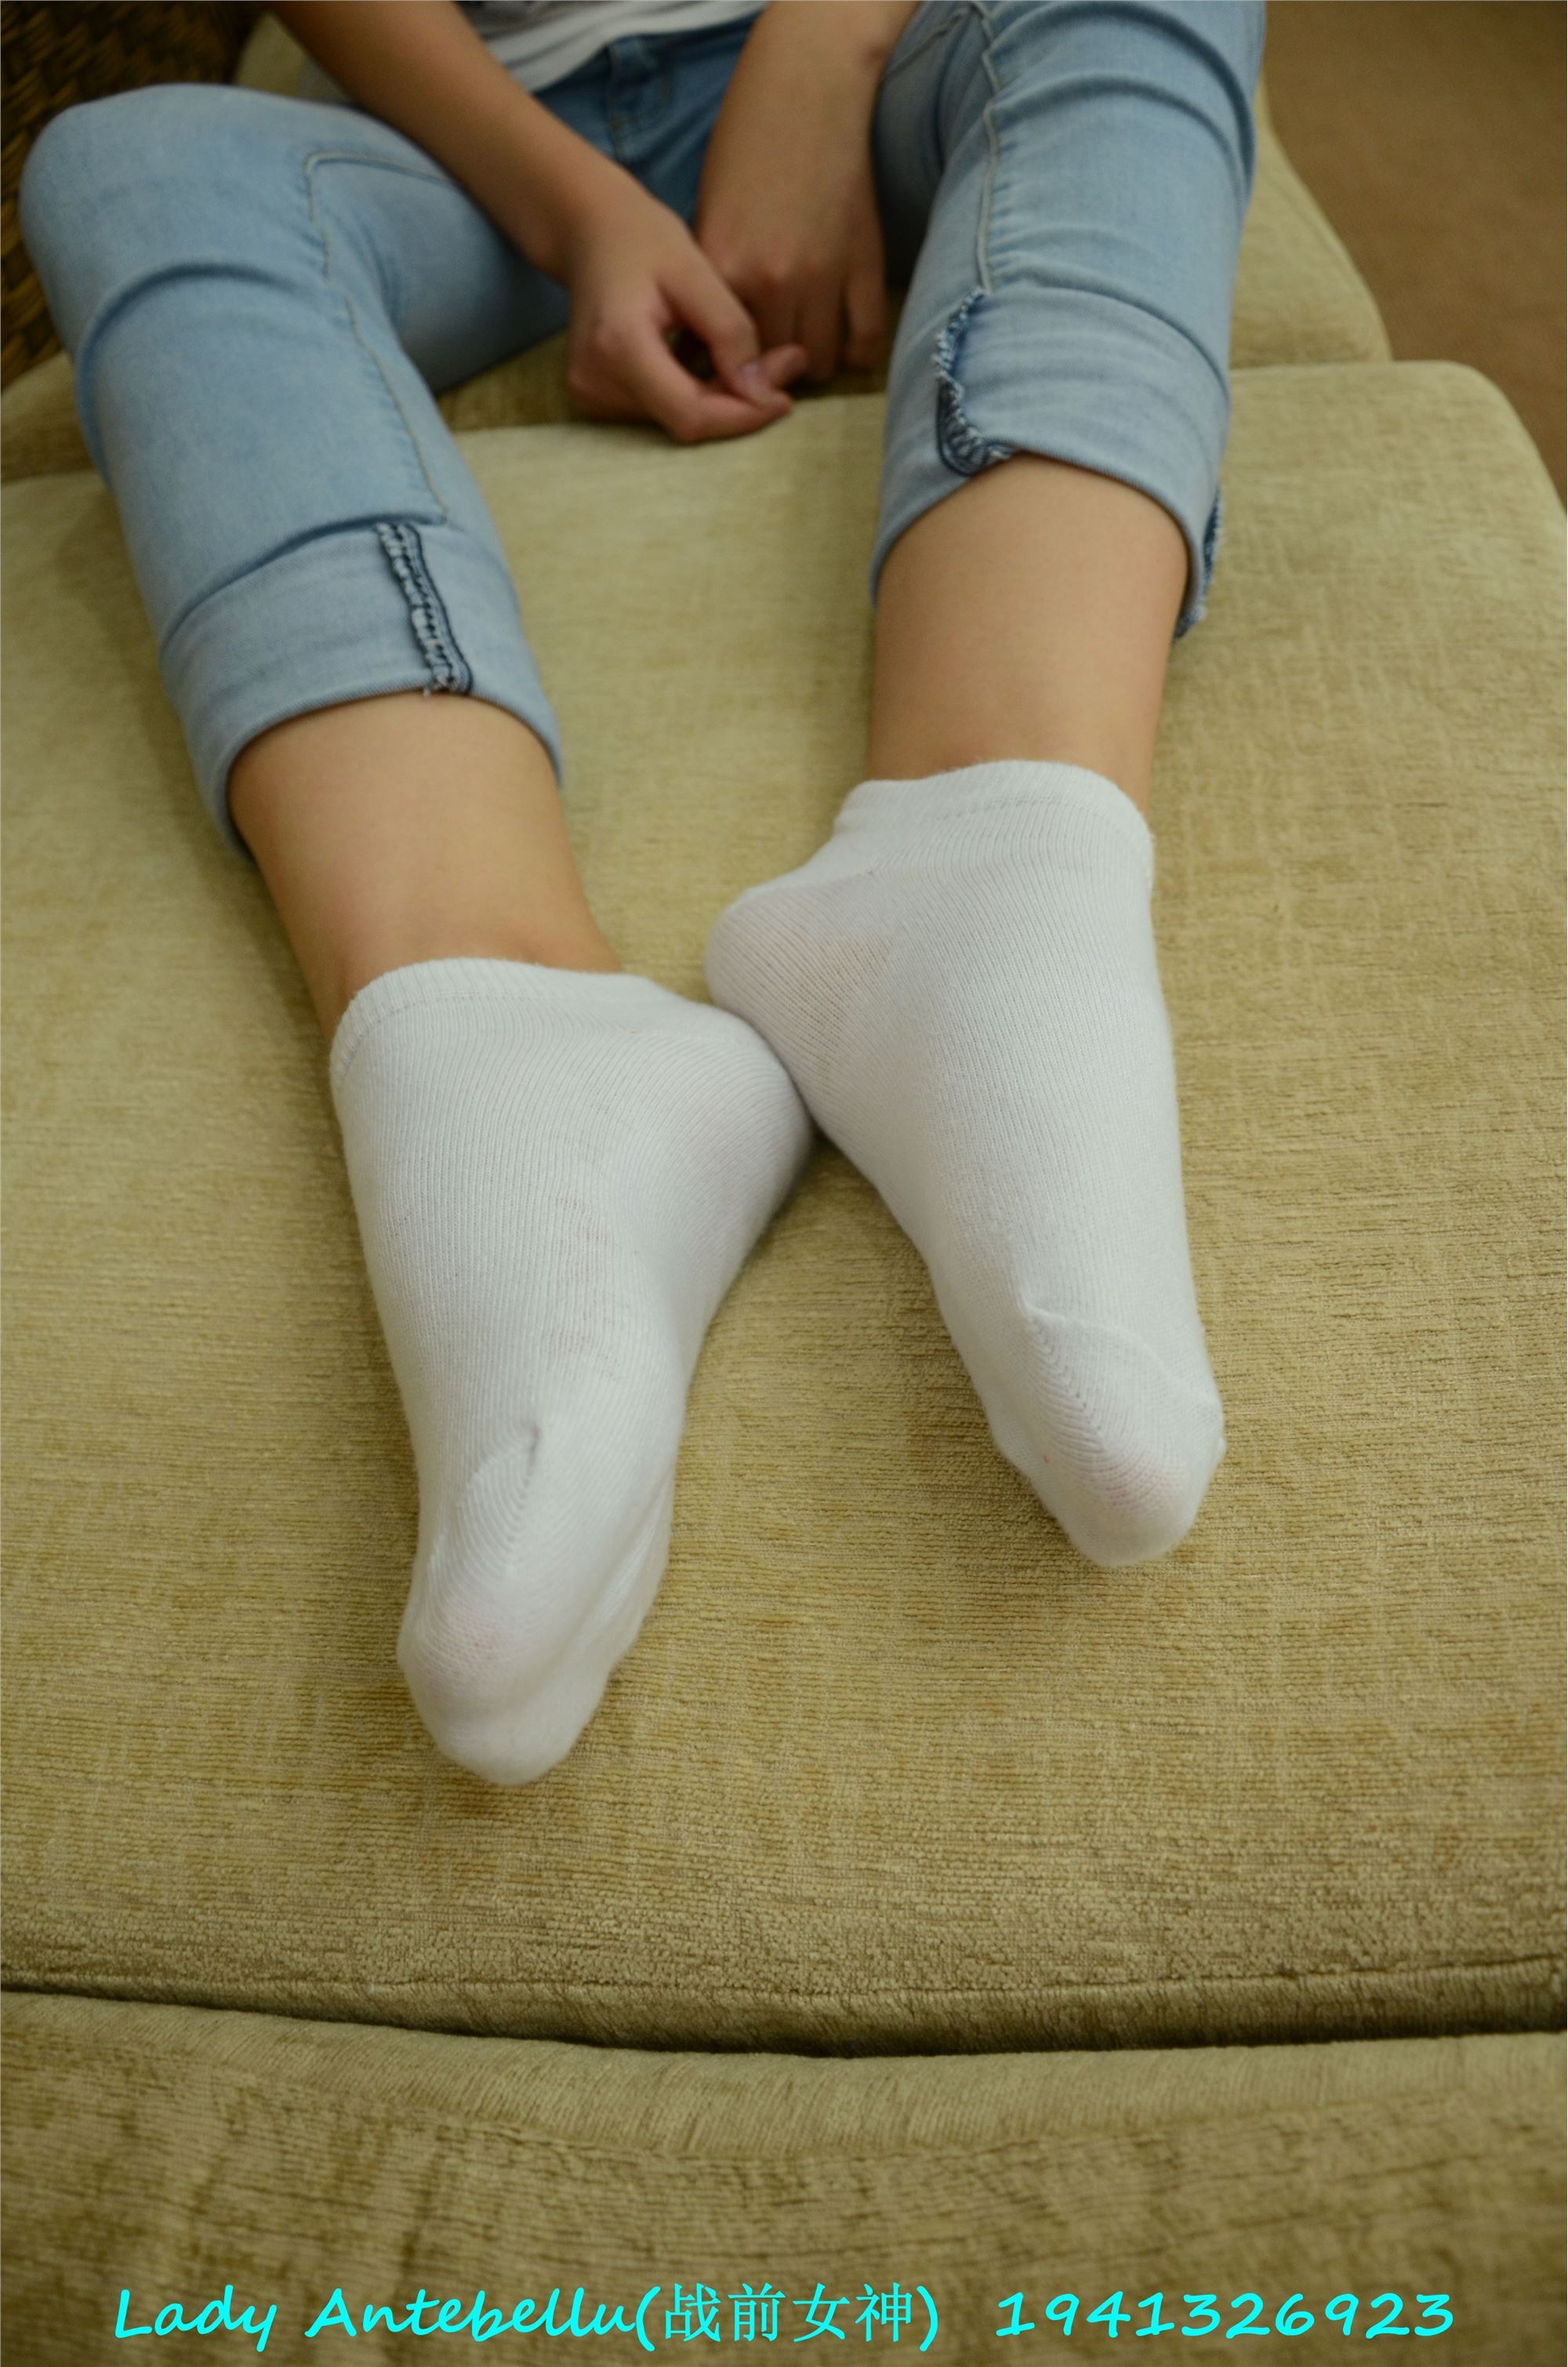 Pre war goddess's feet and legs cotton stockings